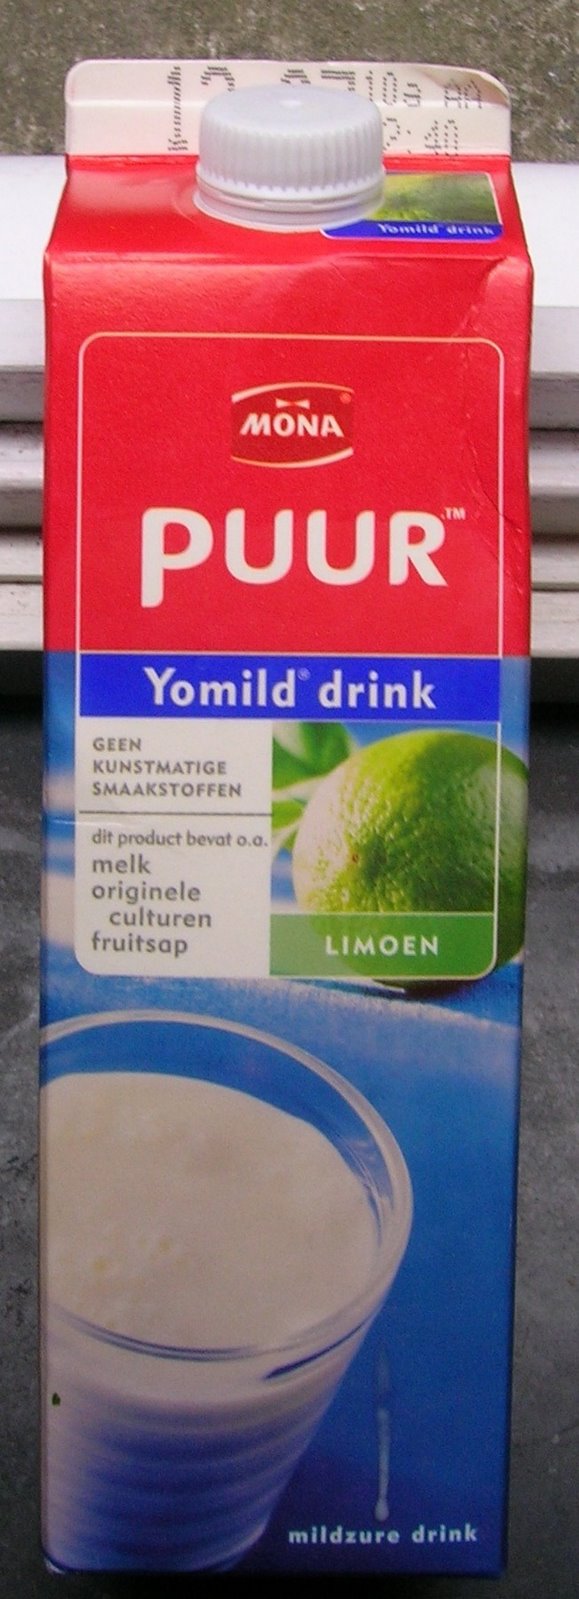 [Yomild+drink.jpg]